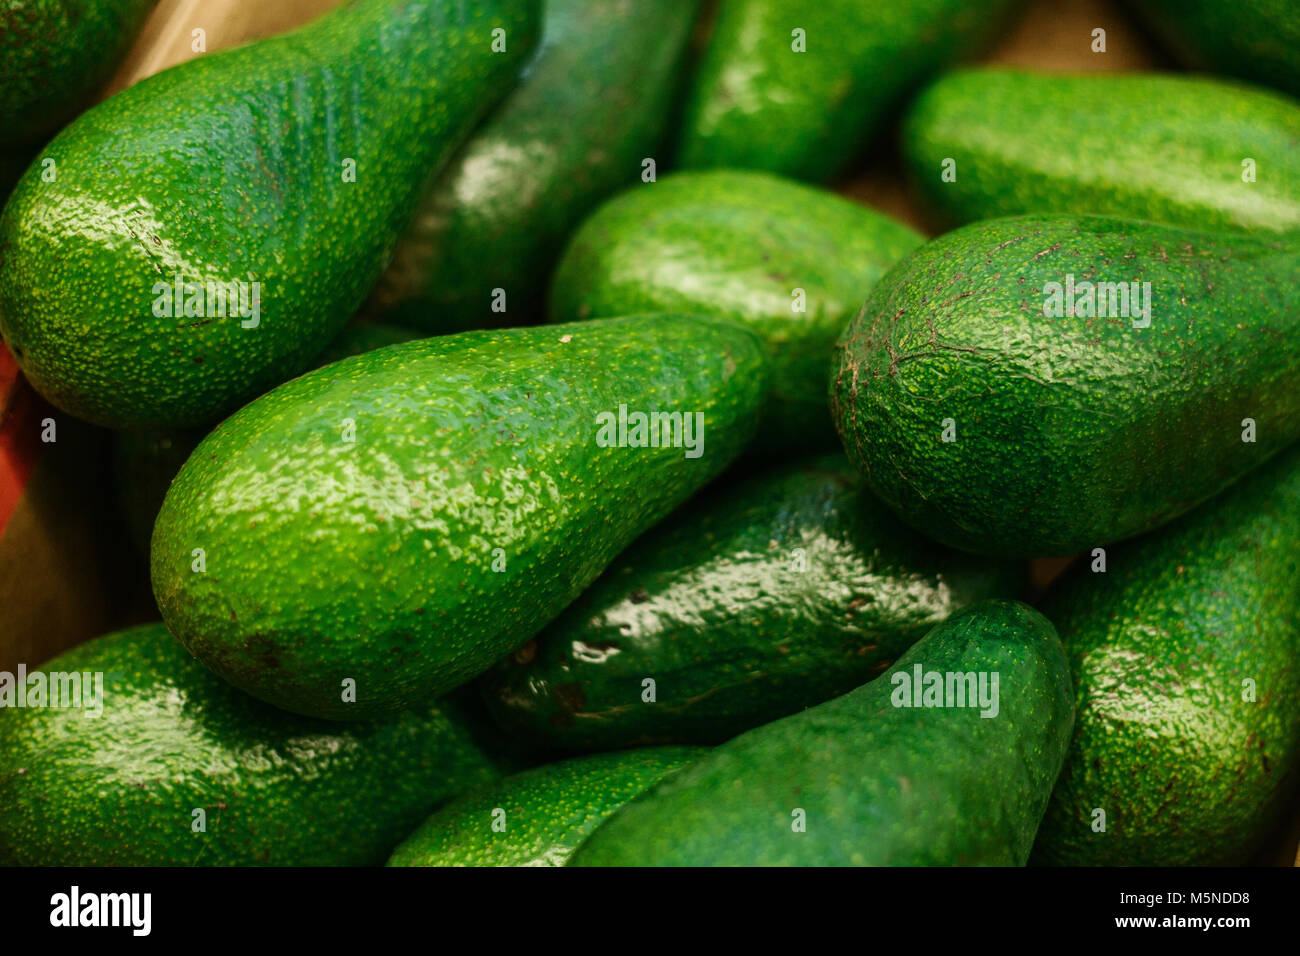 Green fresh delicious avocado. Healthy nutritious food. Stock Photo